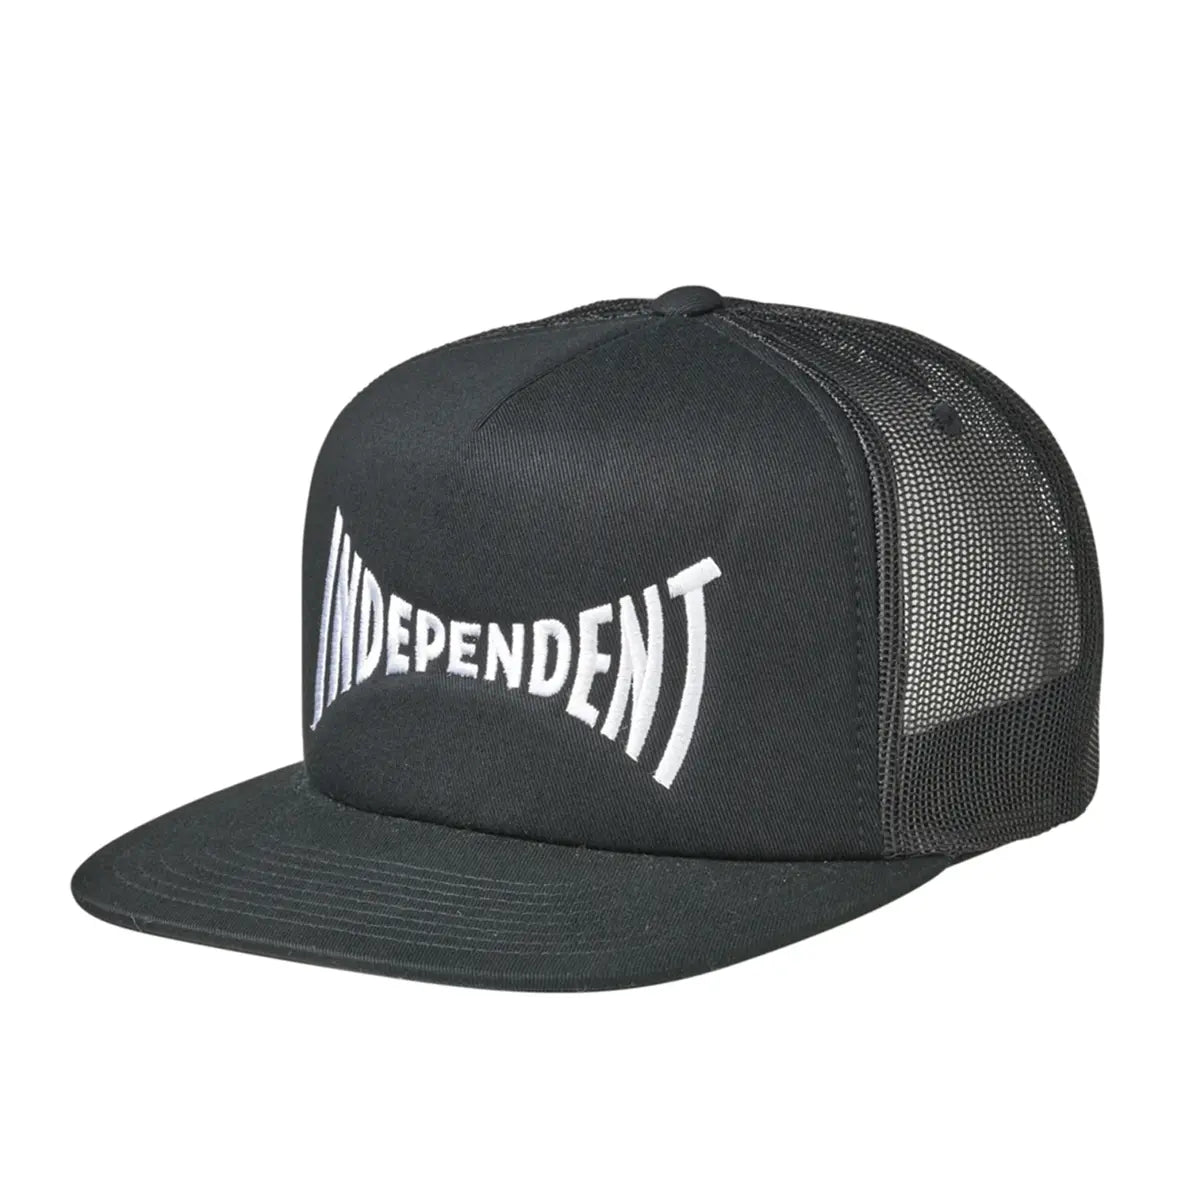 Independent span logo hat